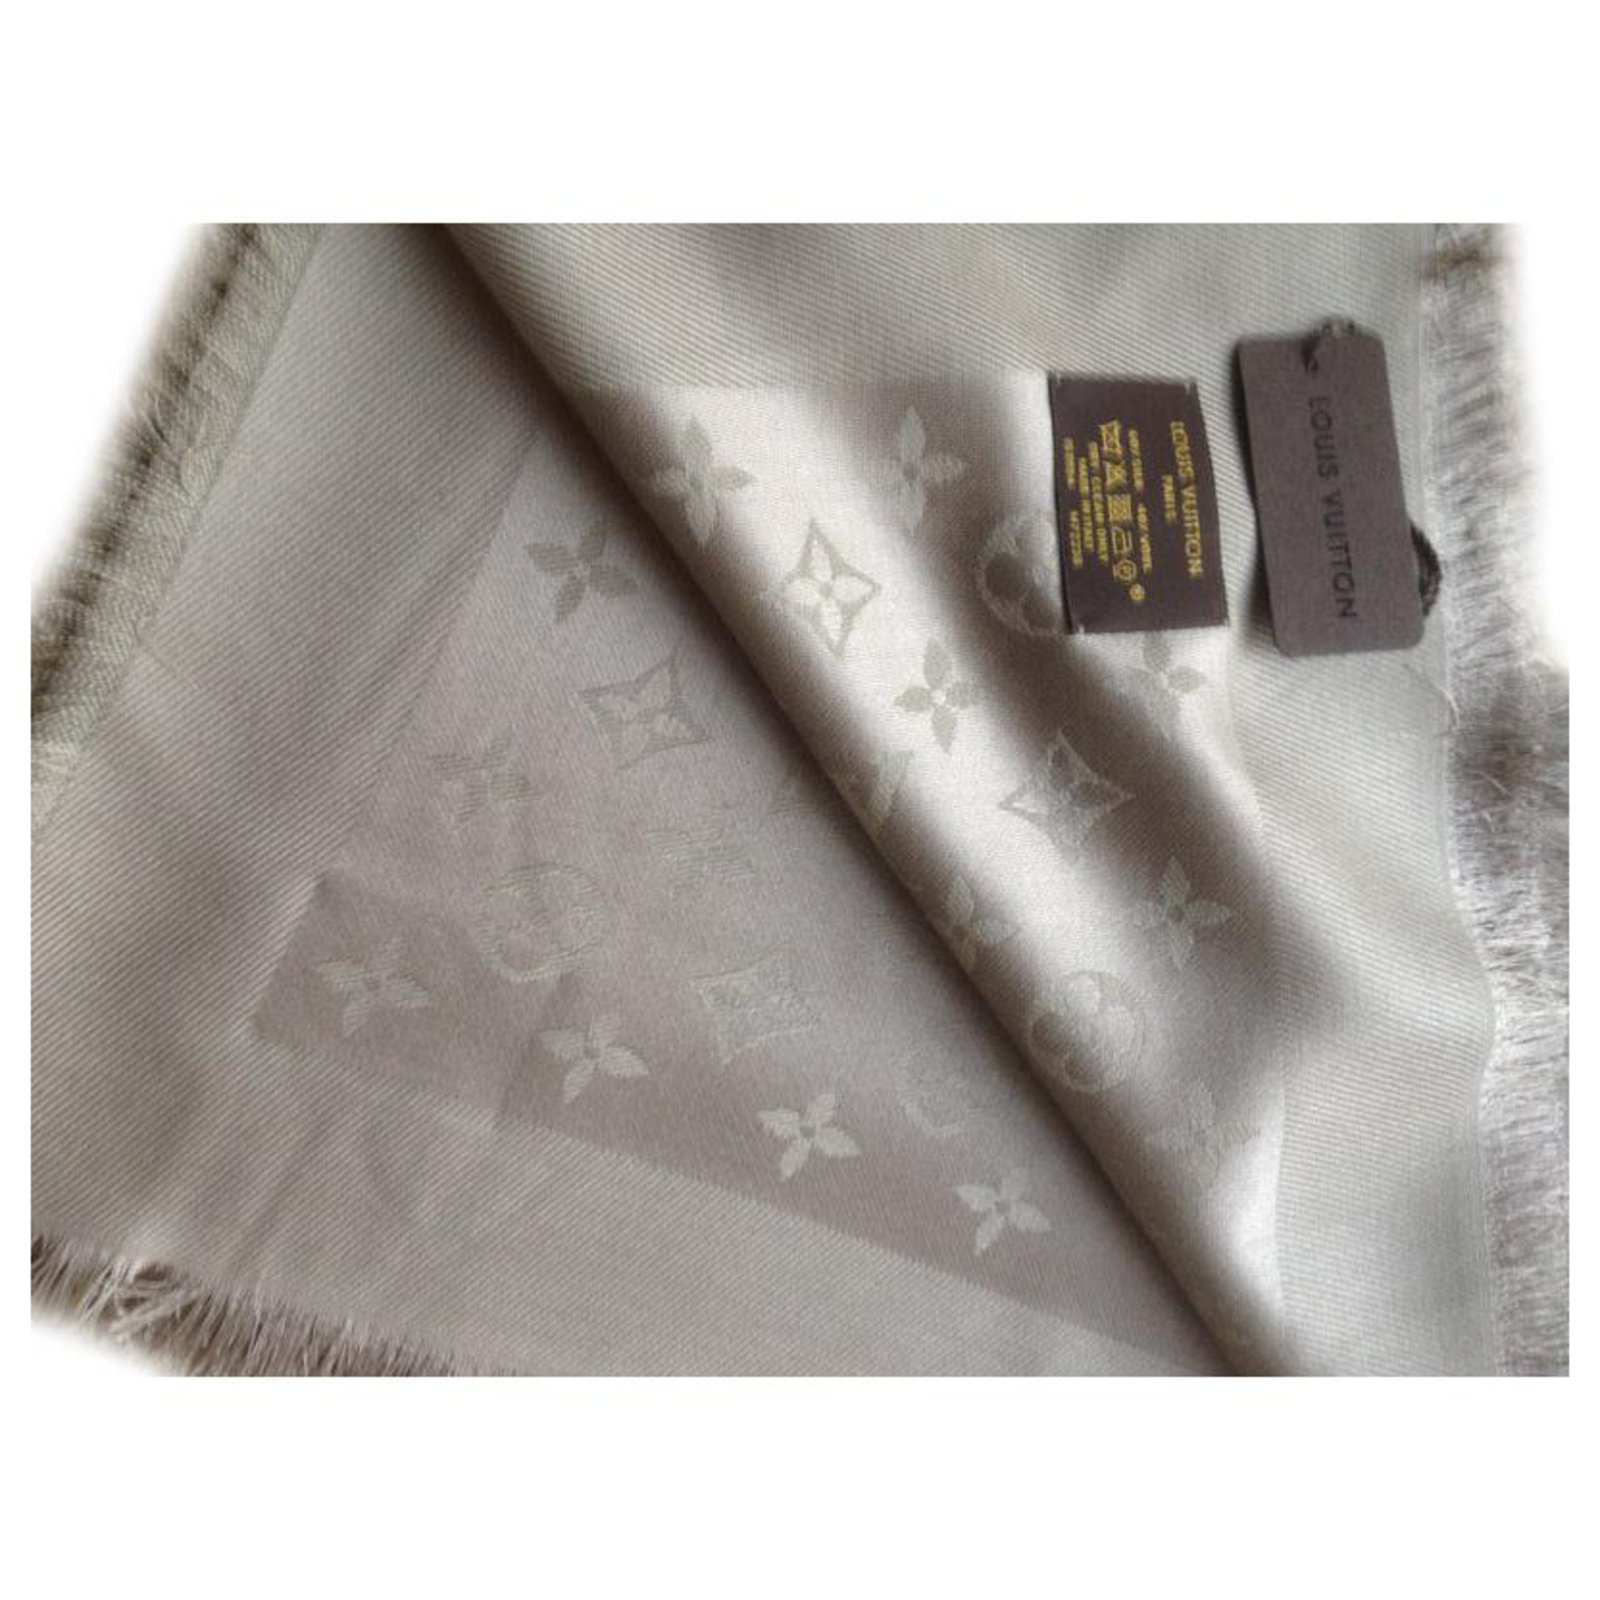 Louis Vuitton St. Germain monogram bag dune beige leather, vintage  Ferragamo silk scarf, how to tie a silk scarf at the neck - Meagan's Moda